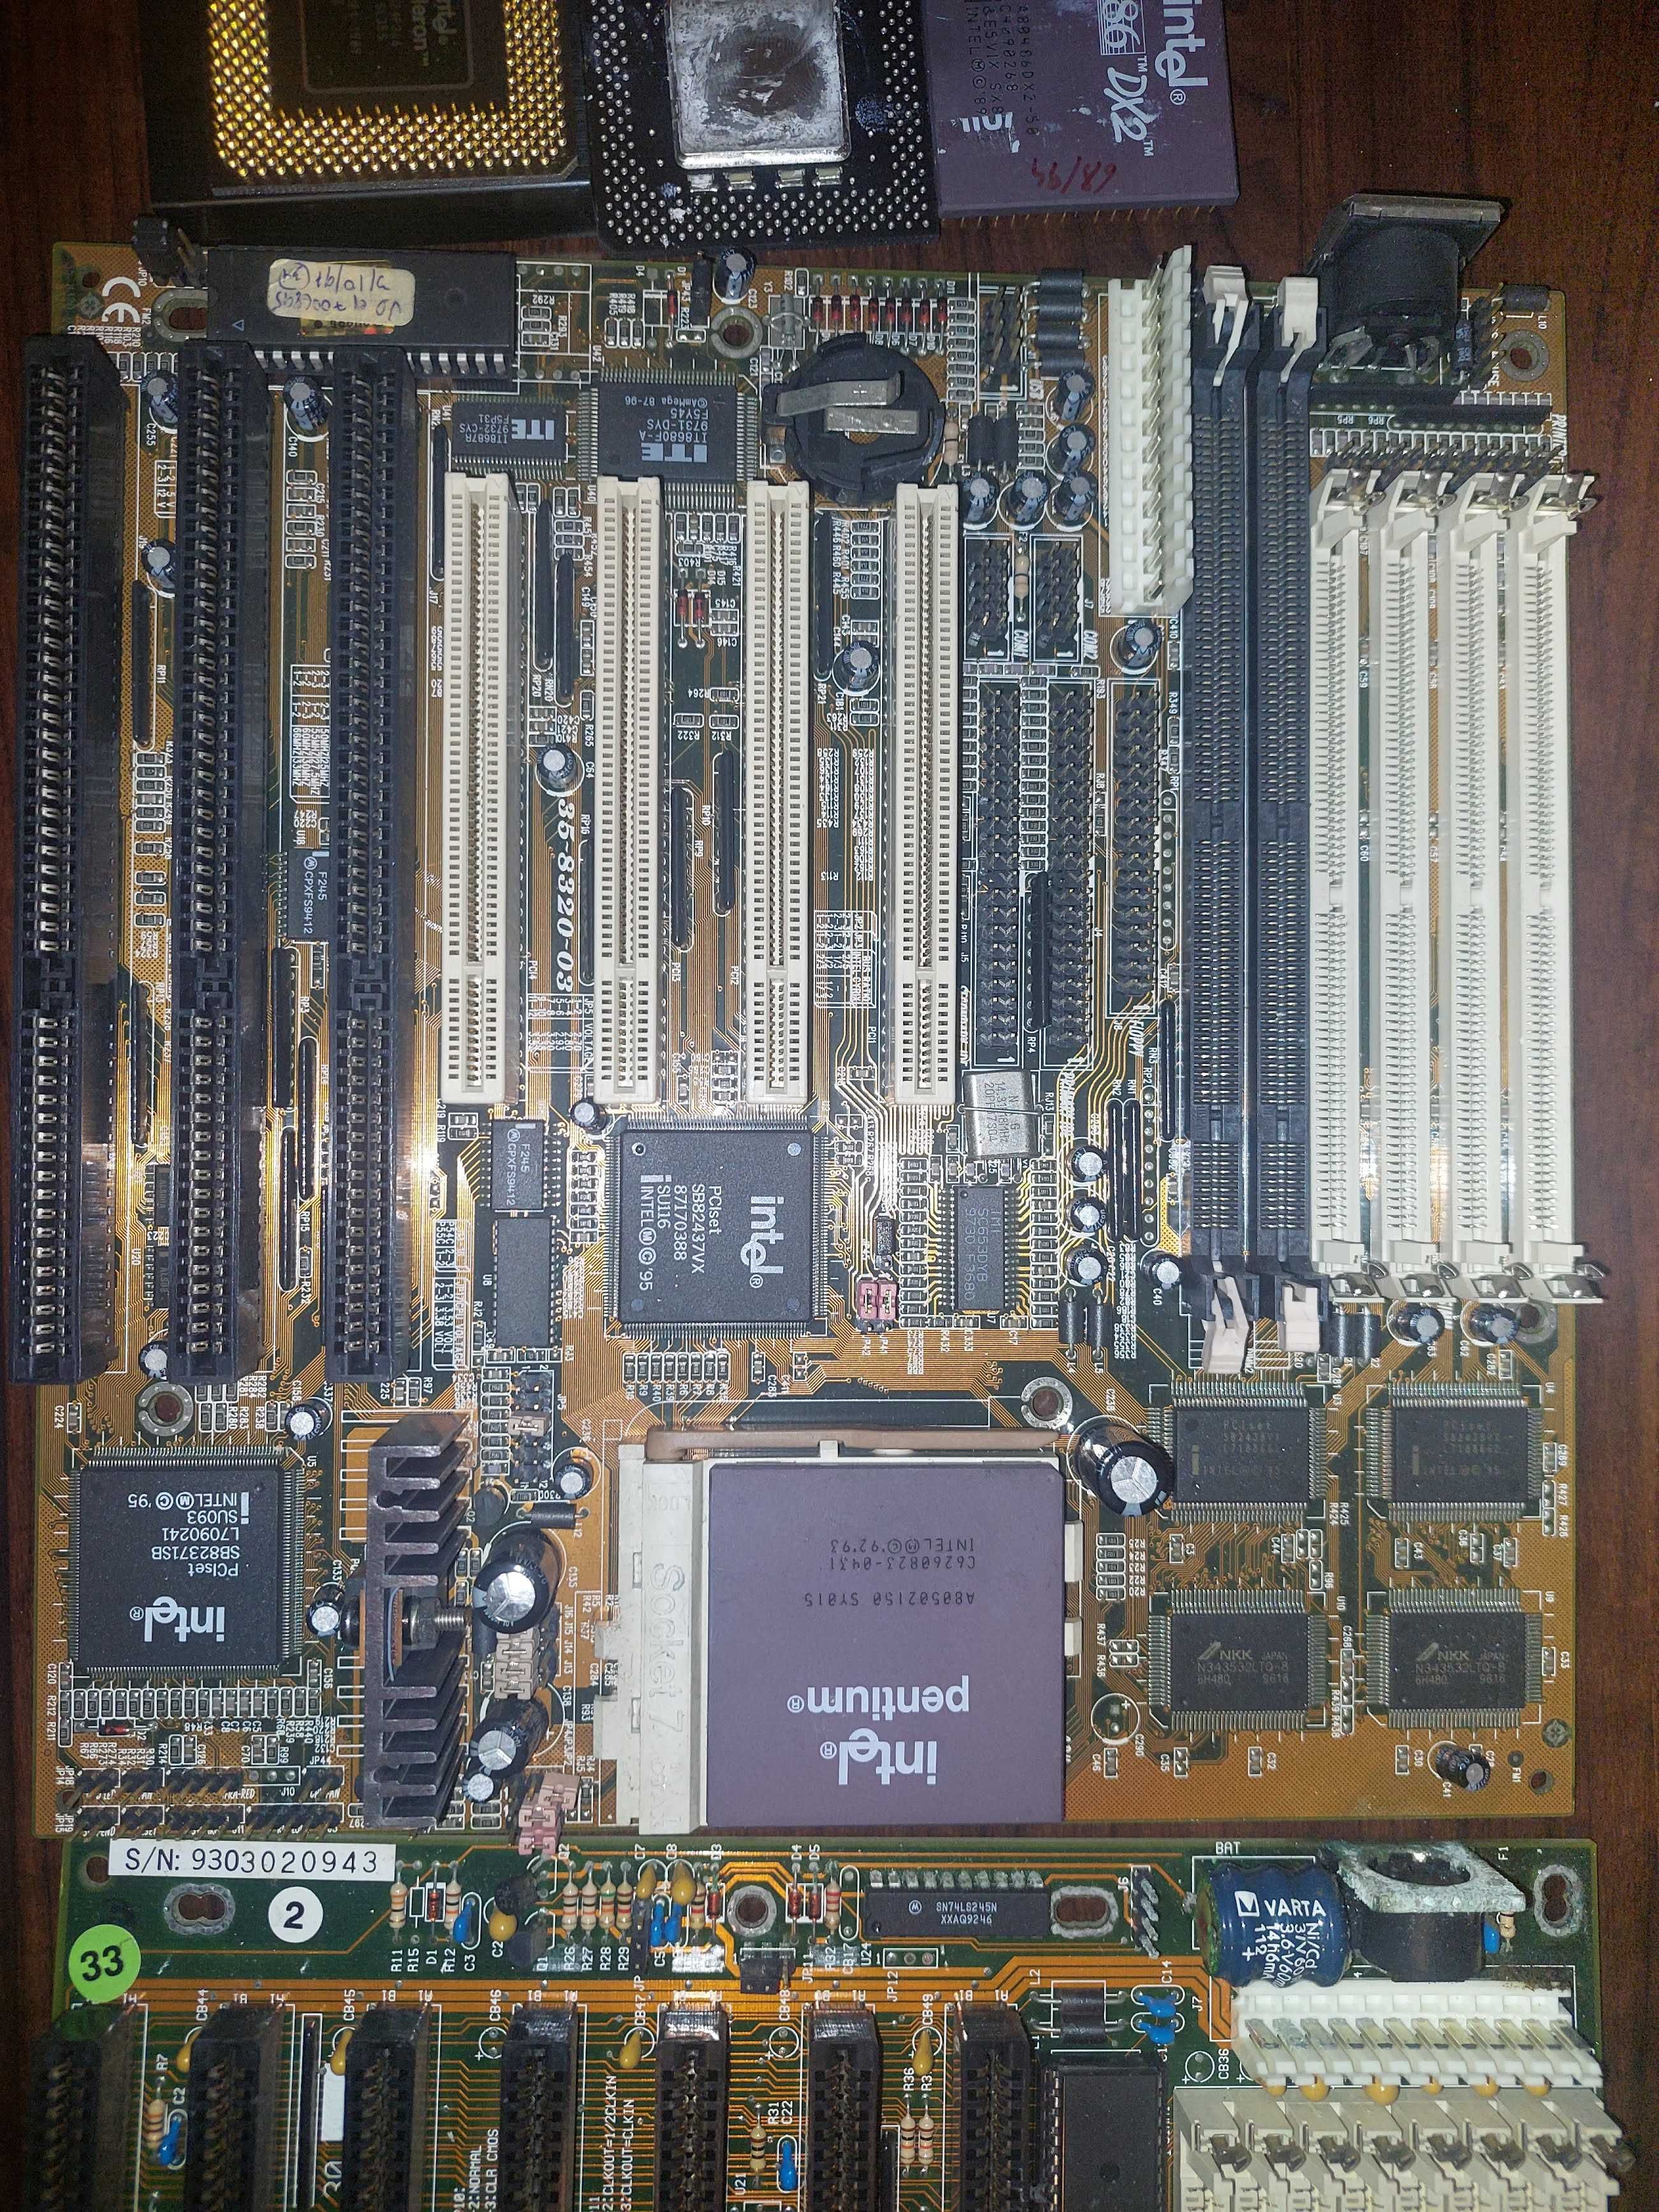 Motherboards processadores e memórias de PC Vintage